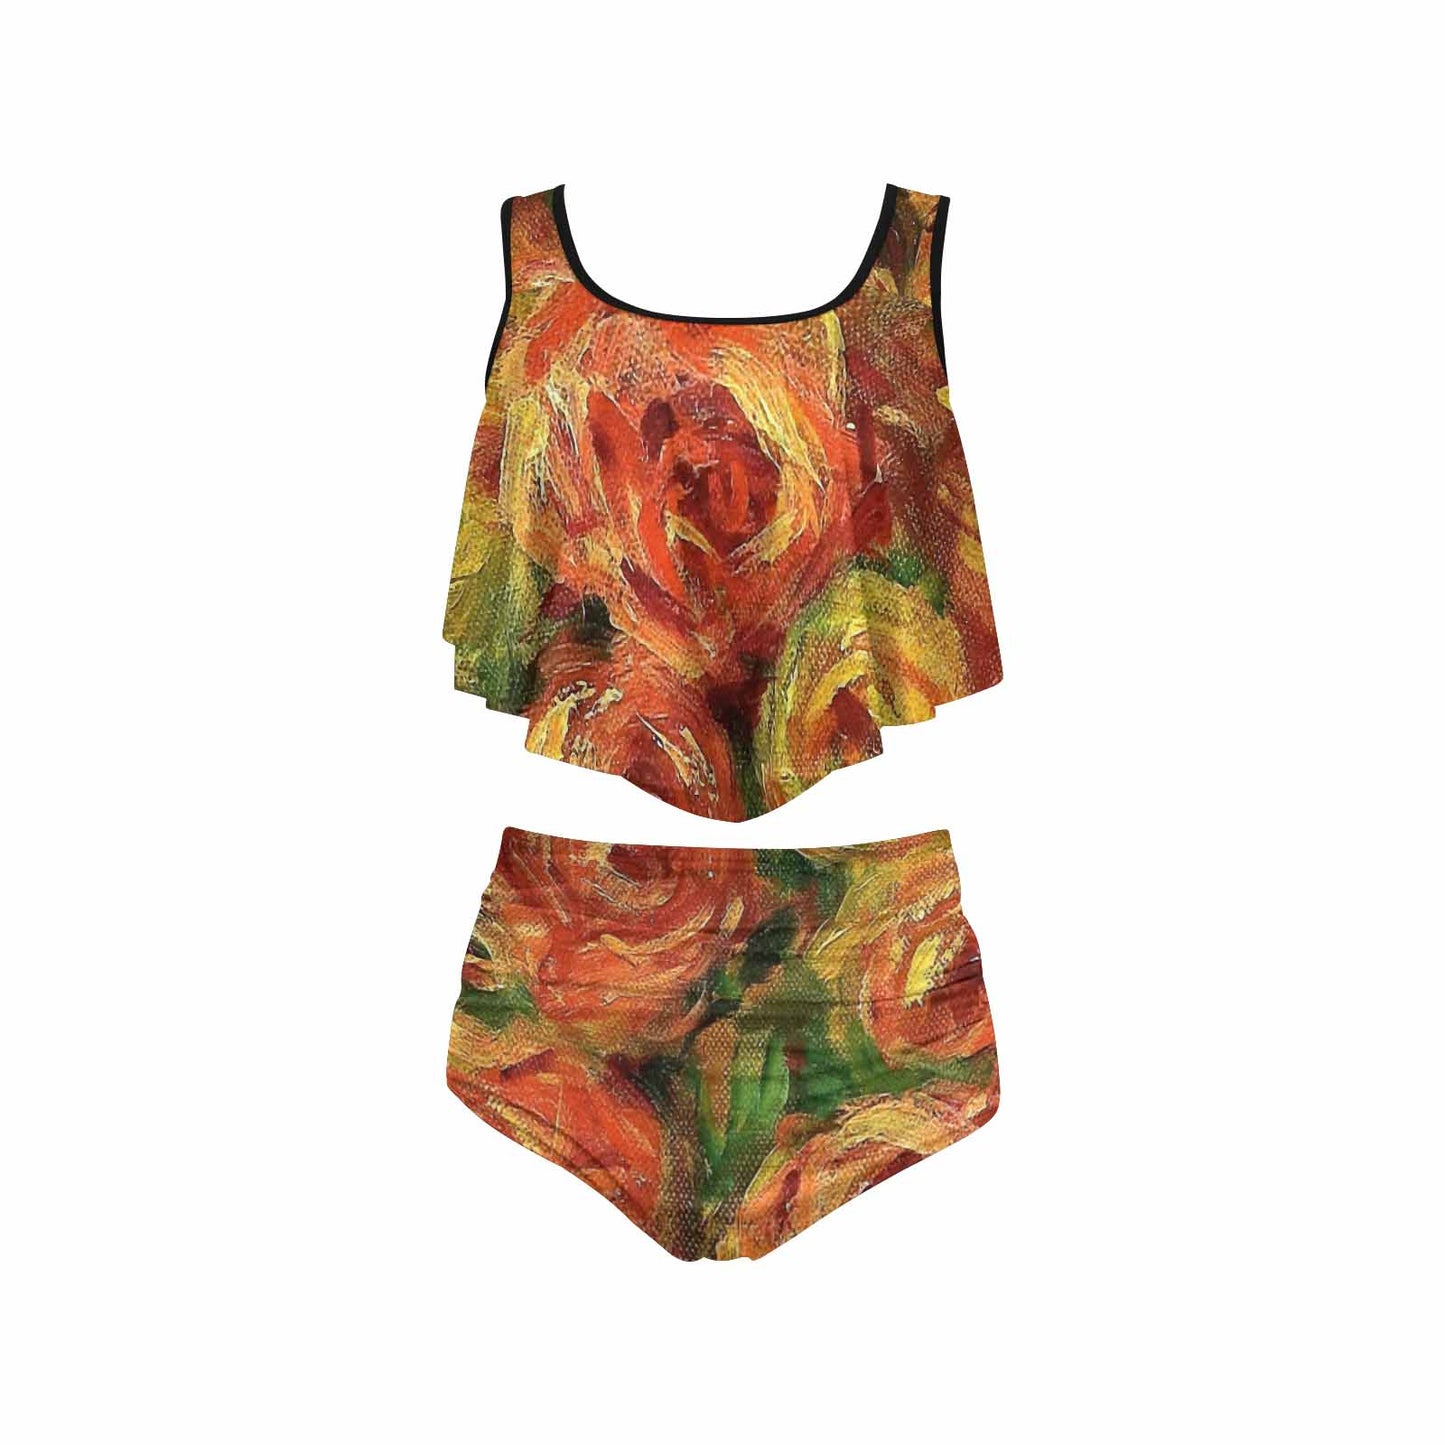 Vintage floral high waisted flounce top bikini, swim wear, Design 18